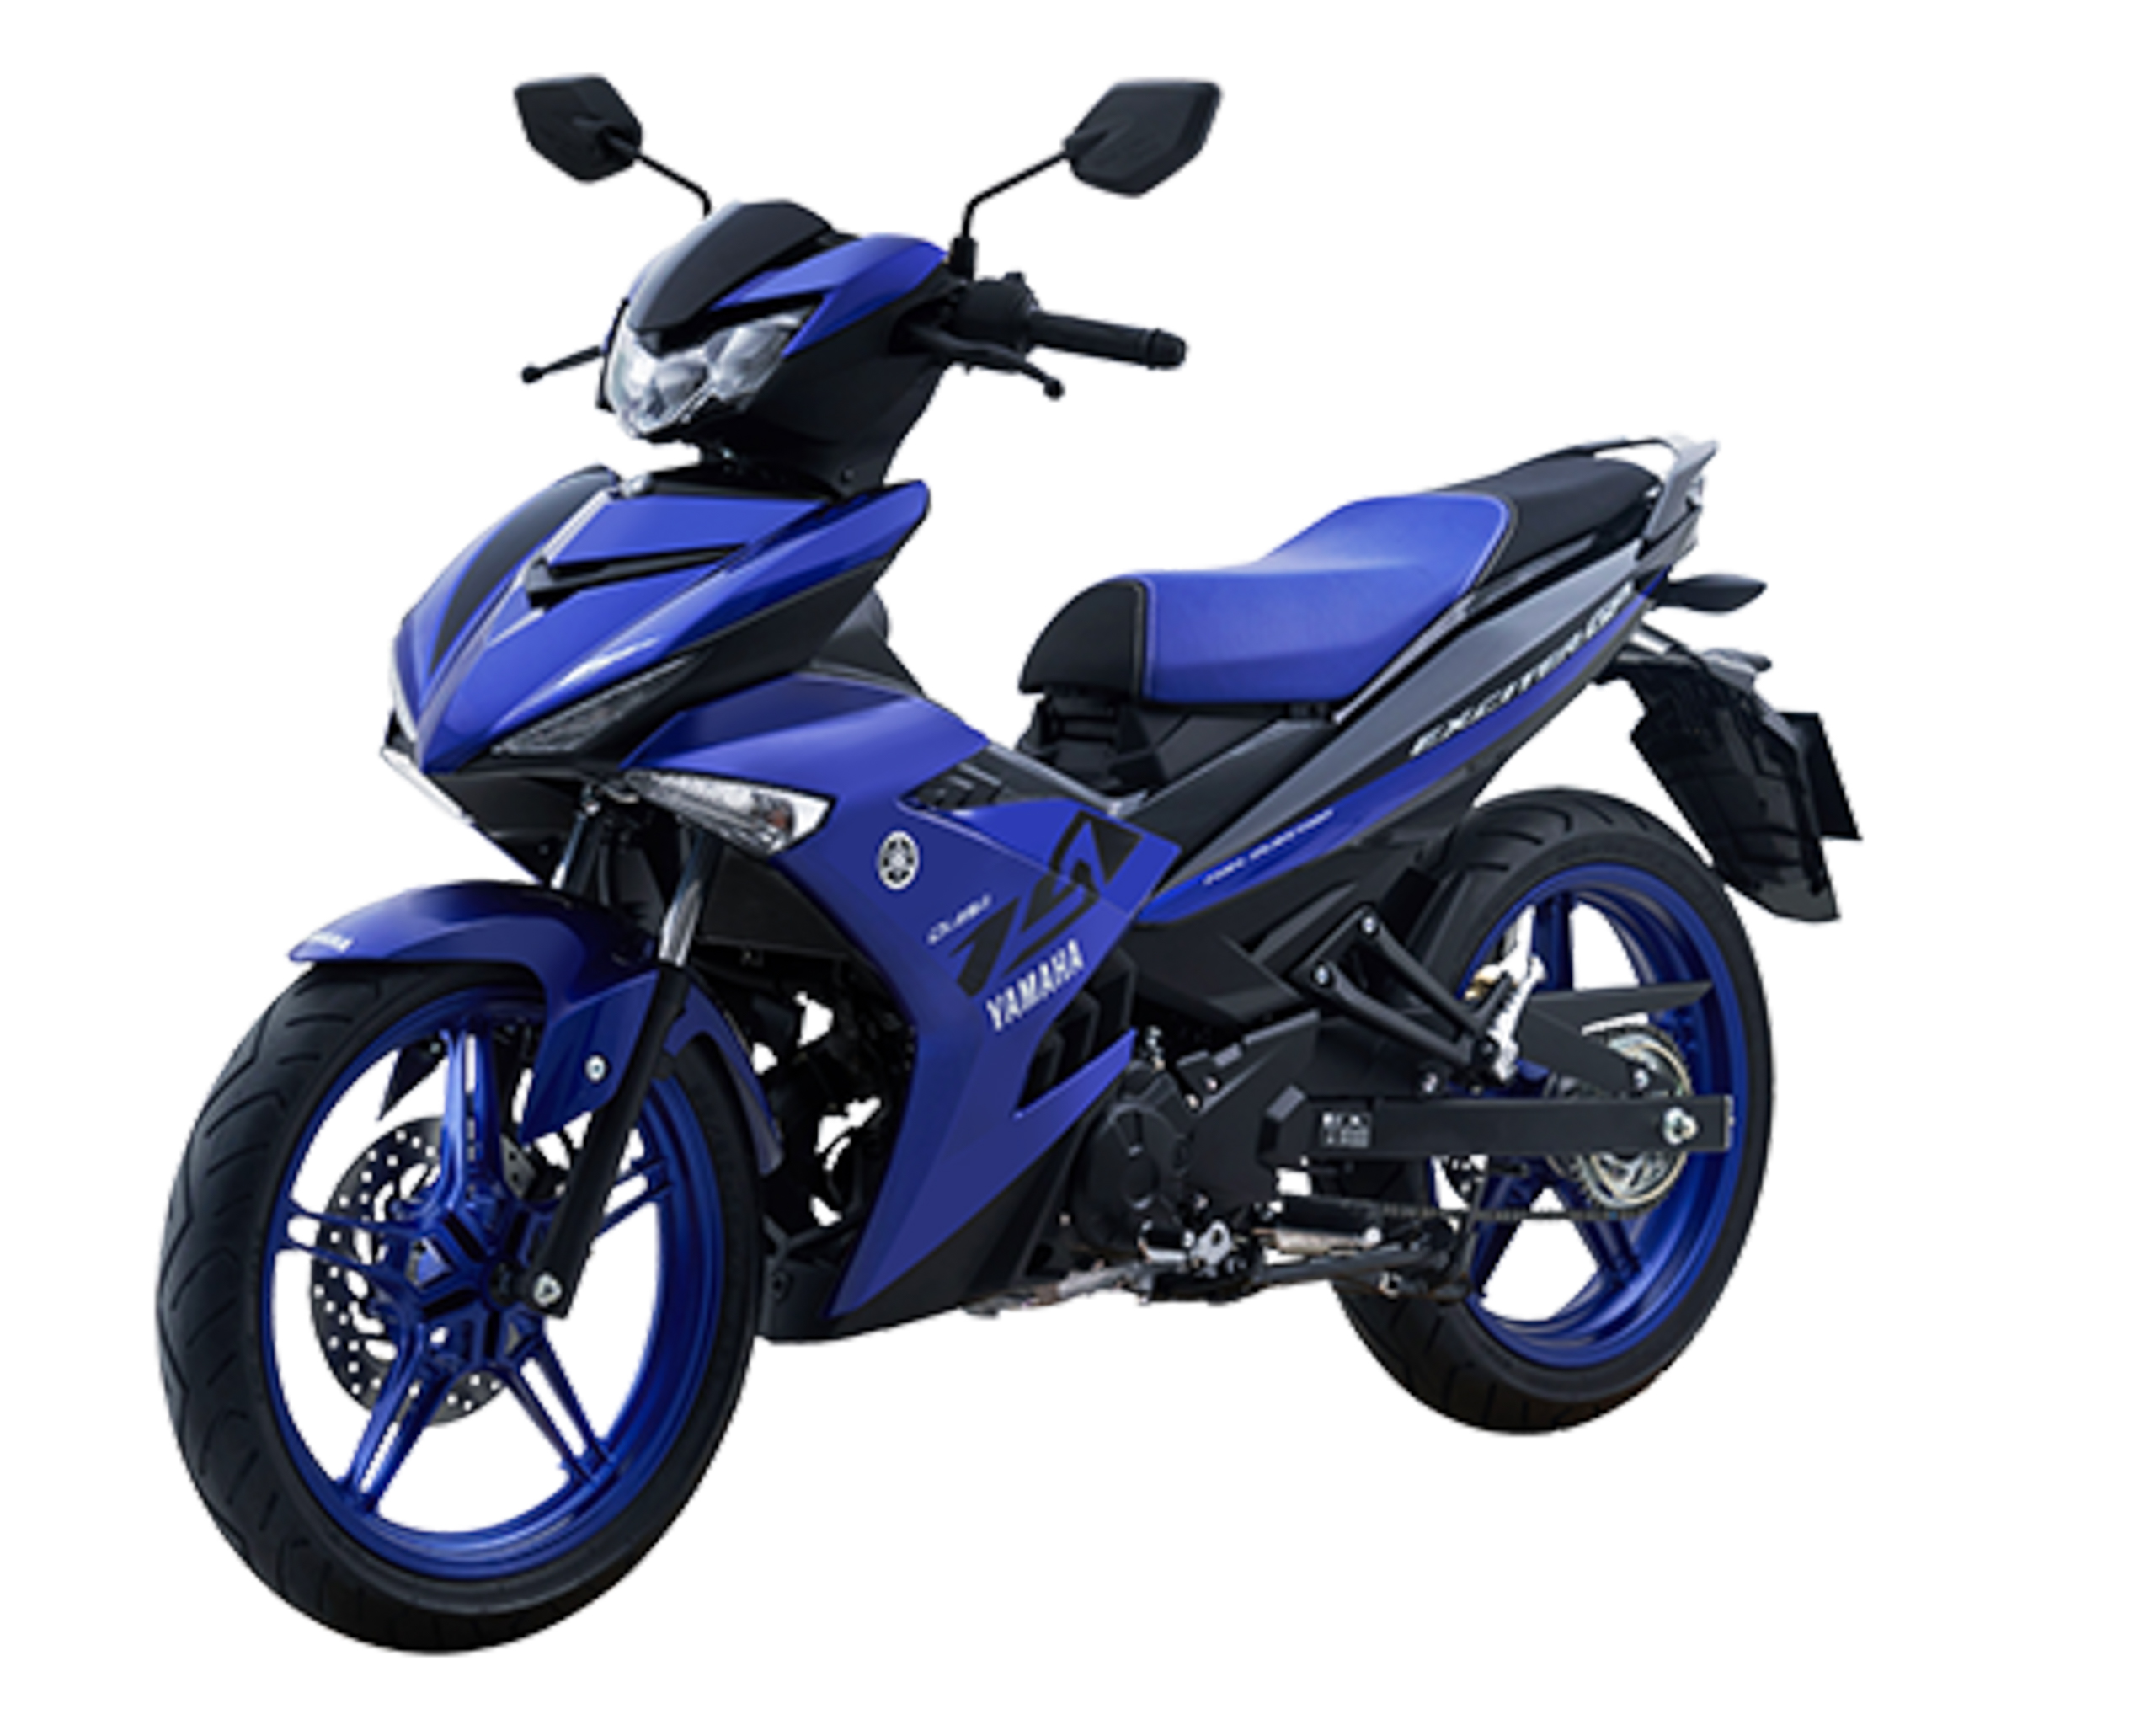 Yamaha Exciter 150 Atau Y15zr 2019 Ditunjuk Secara Rasmi Enjin Masih 150 Cc Banyak Kelengkapan Baru Paultan Org